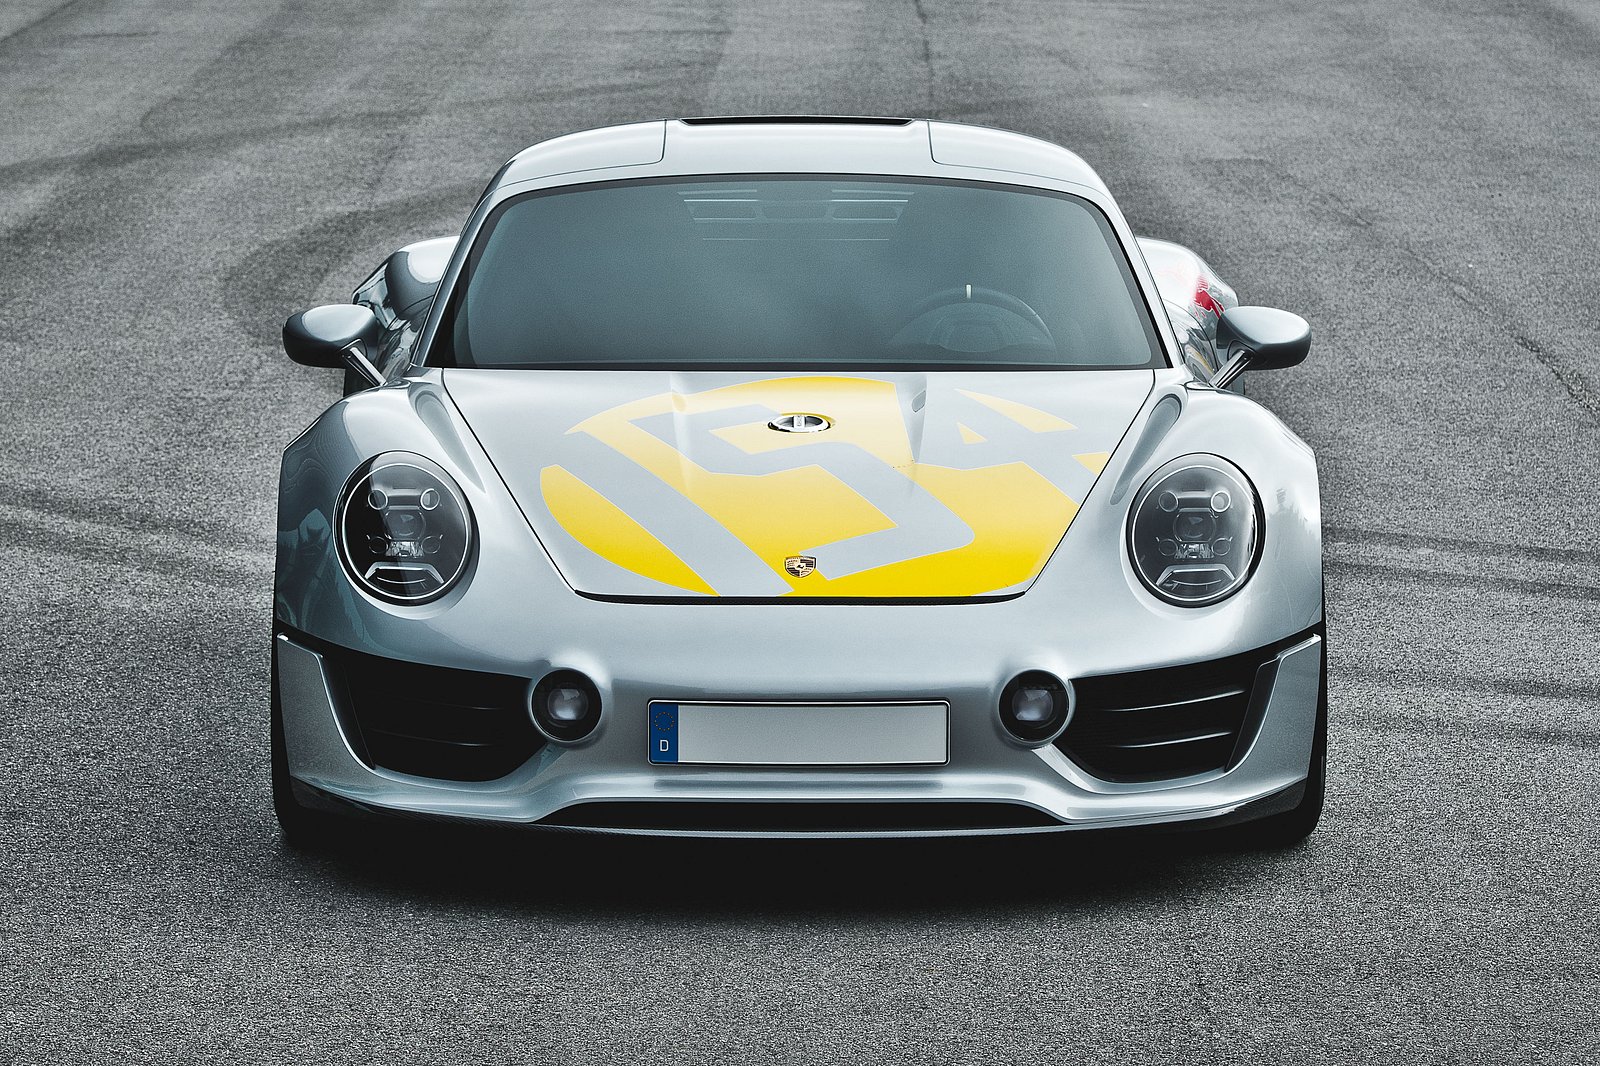 Porsche Le Mans